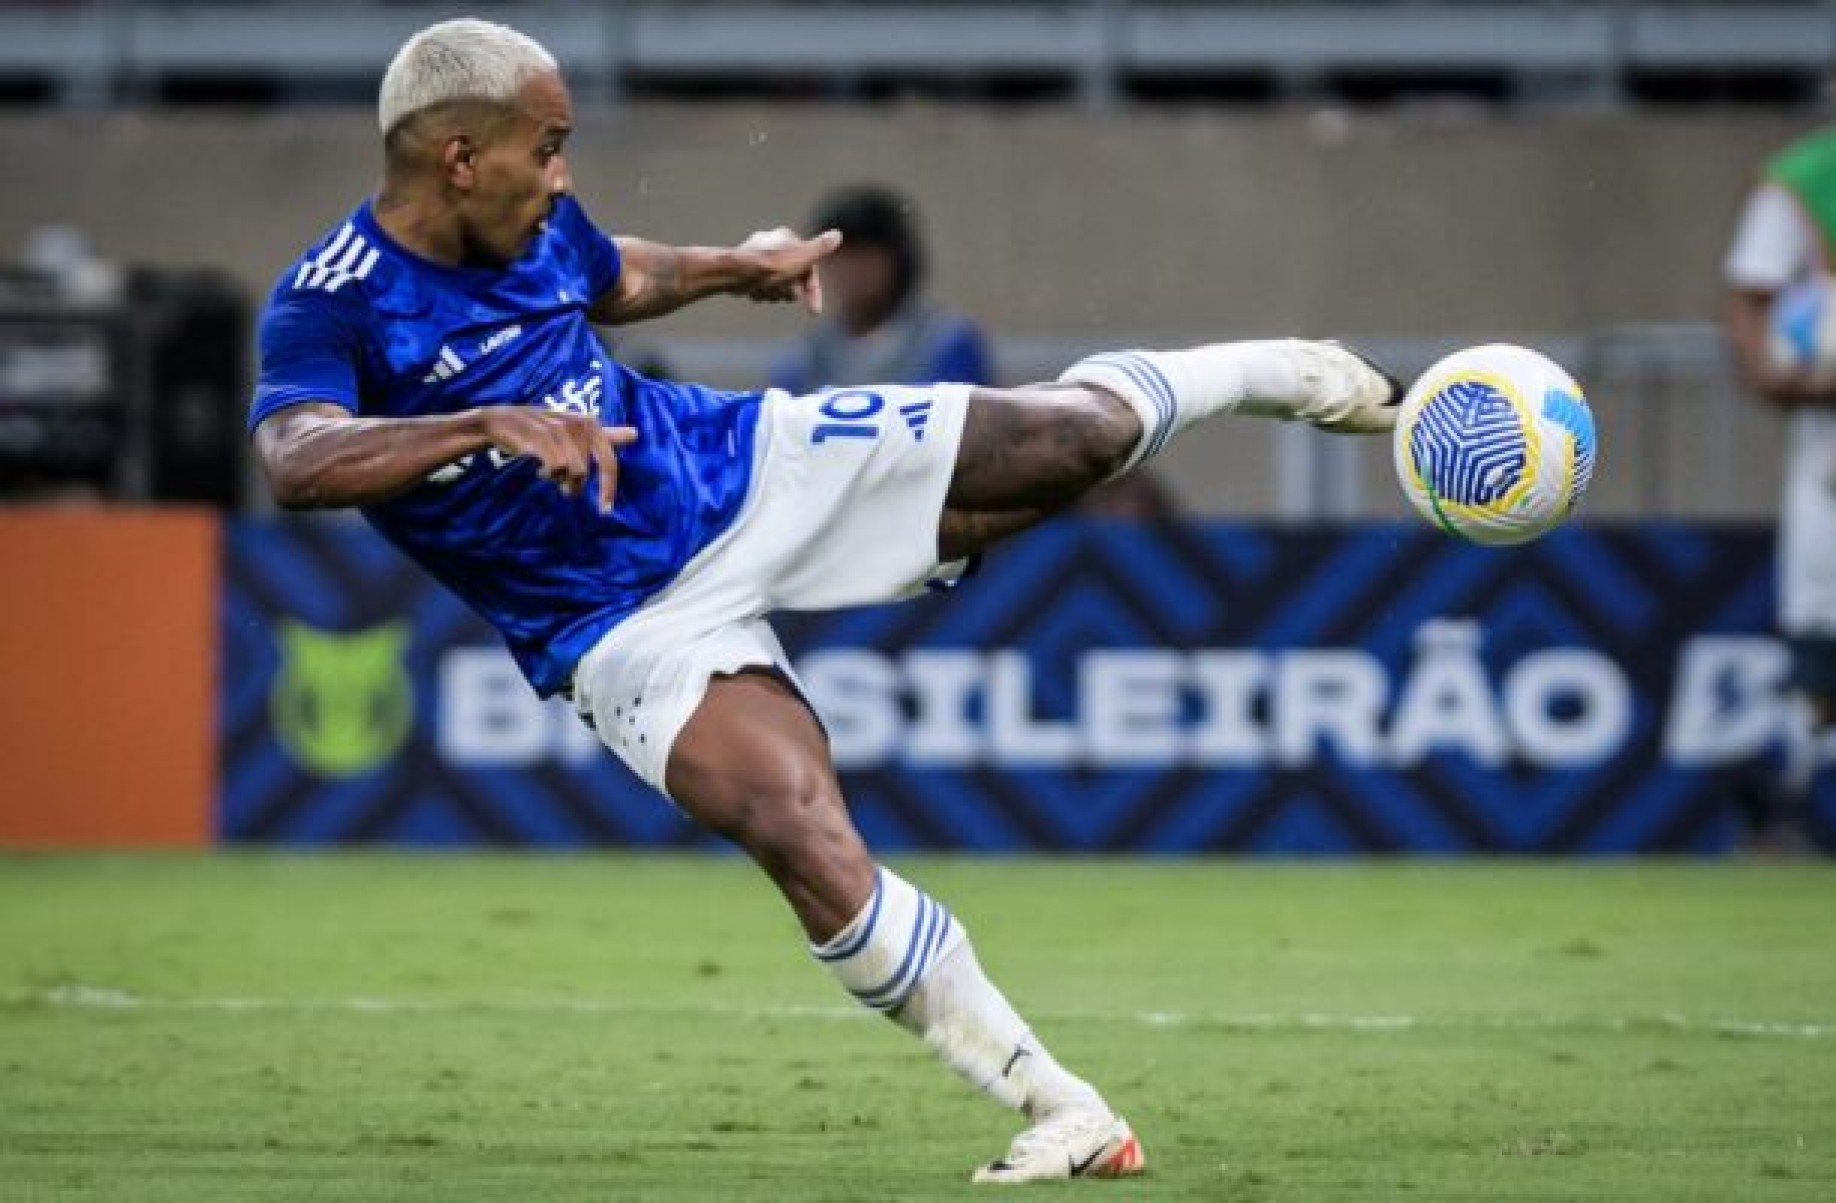 Matheus Pereira vê Cruzeiro ansioso na busca por gols